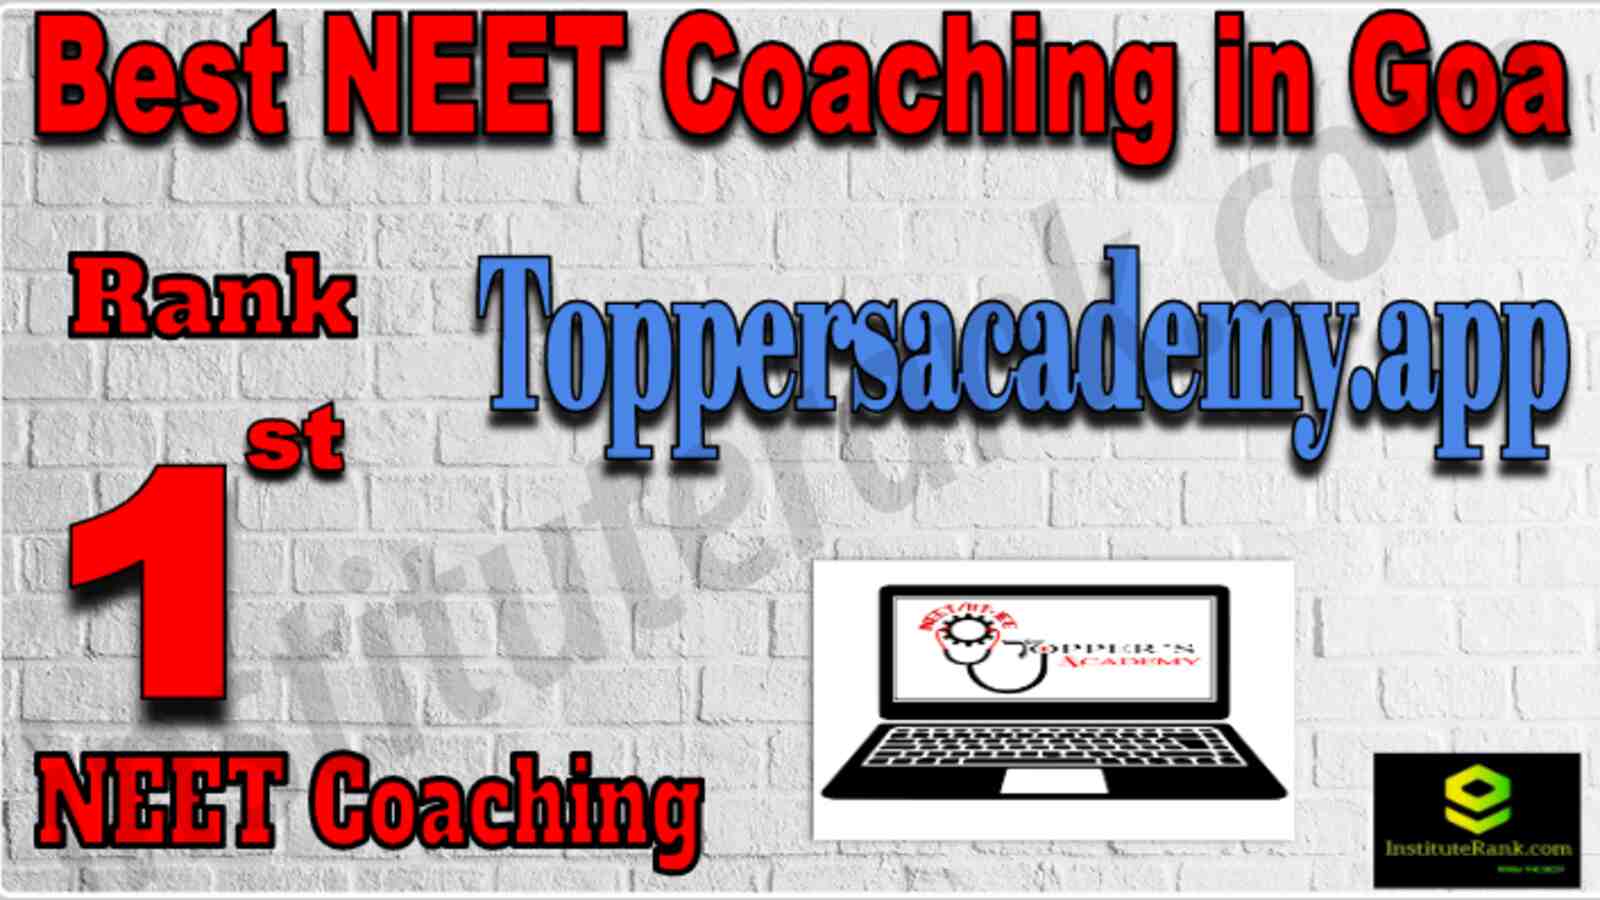 Rank 1 Top NEET Coaching in Goa 2022